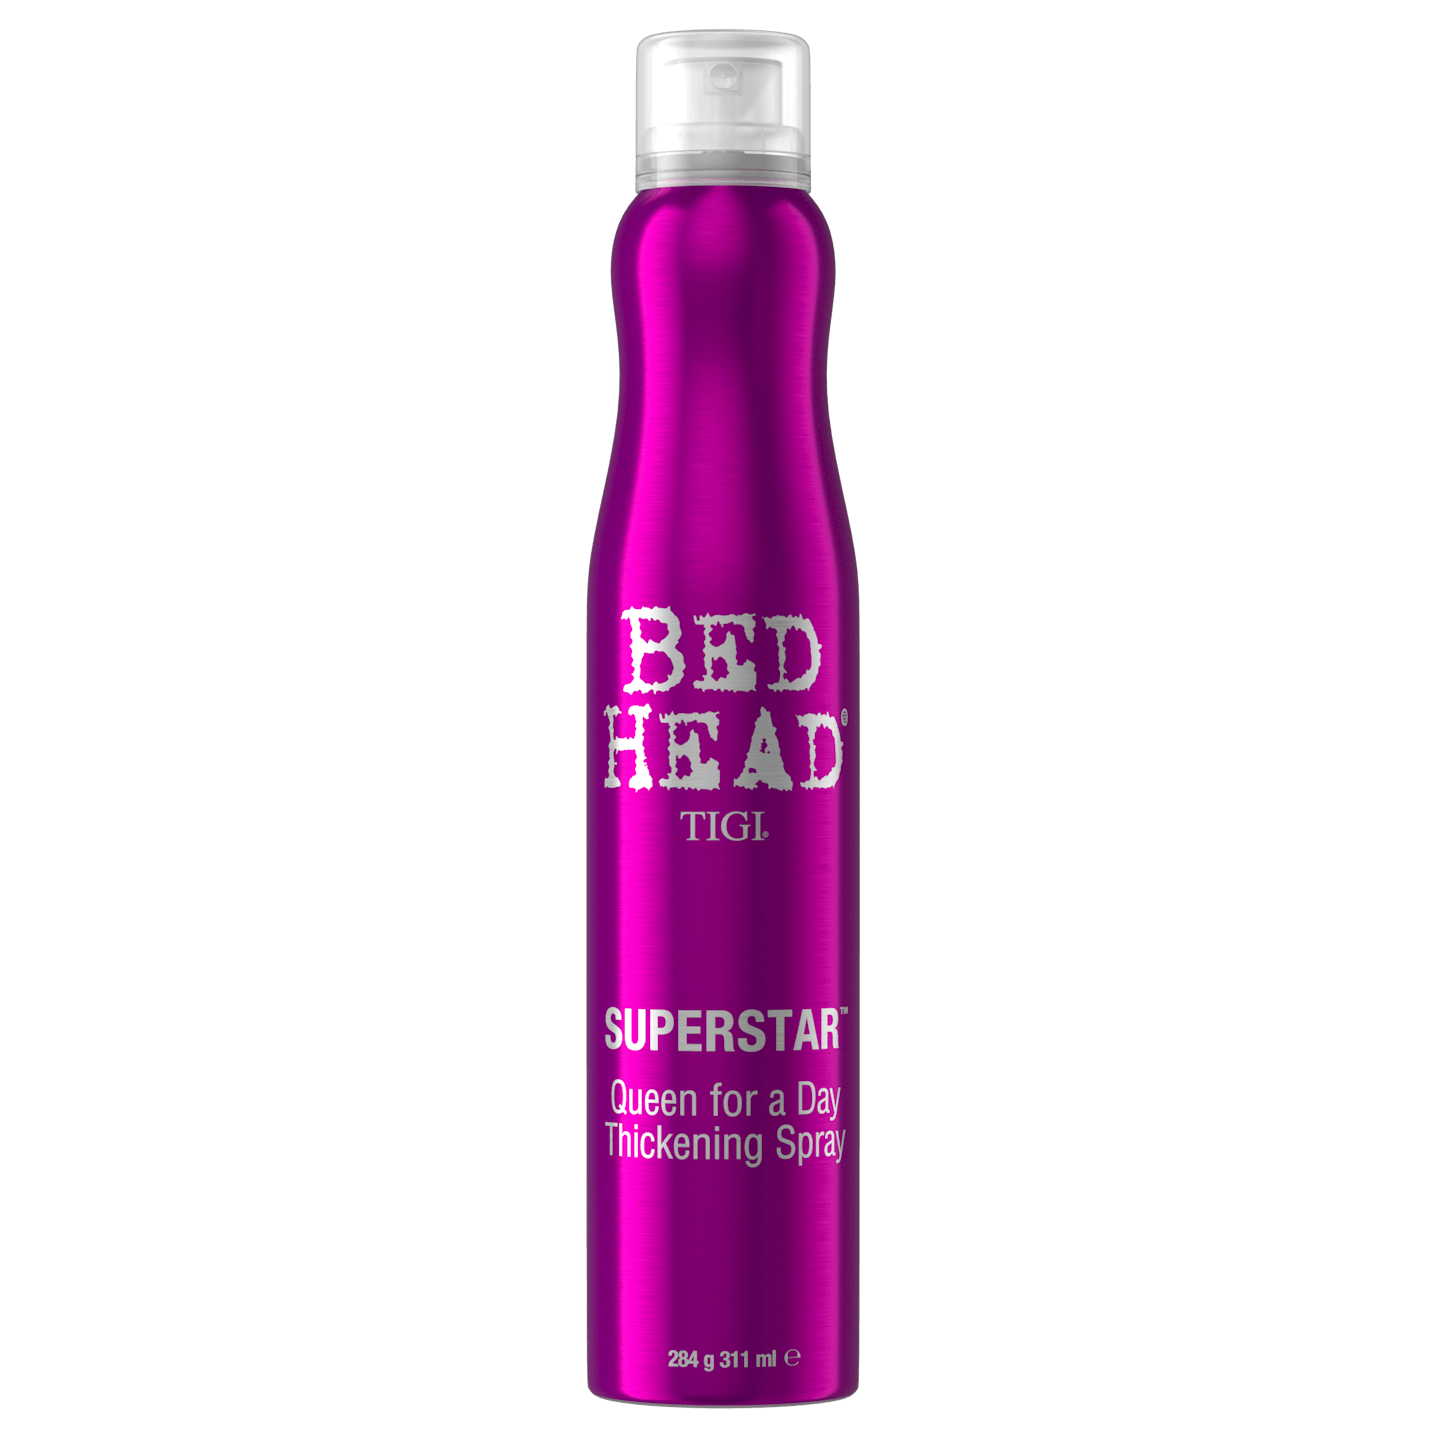 Bedhead spray